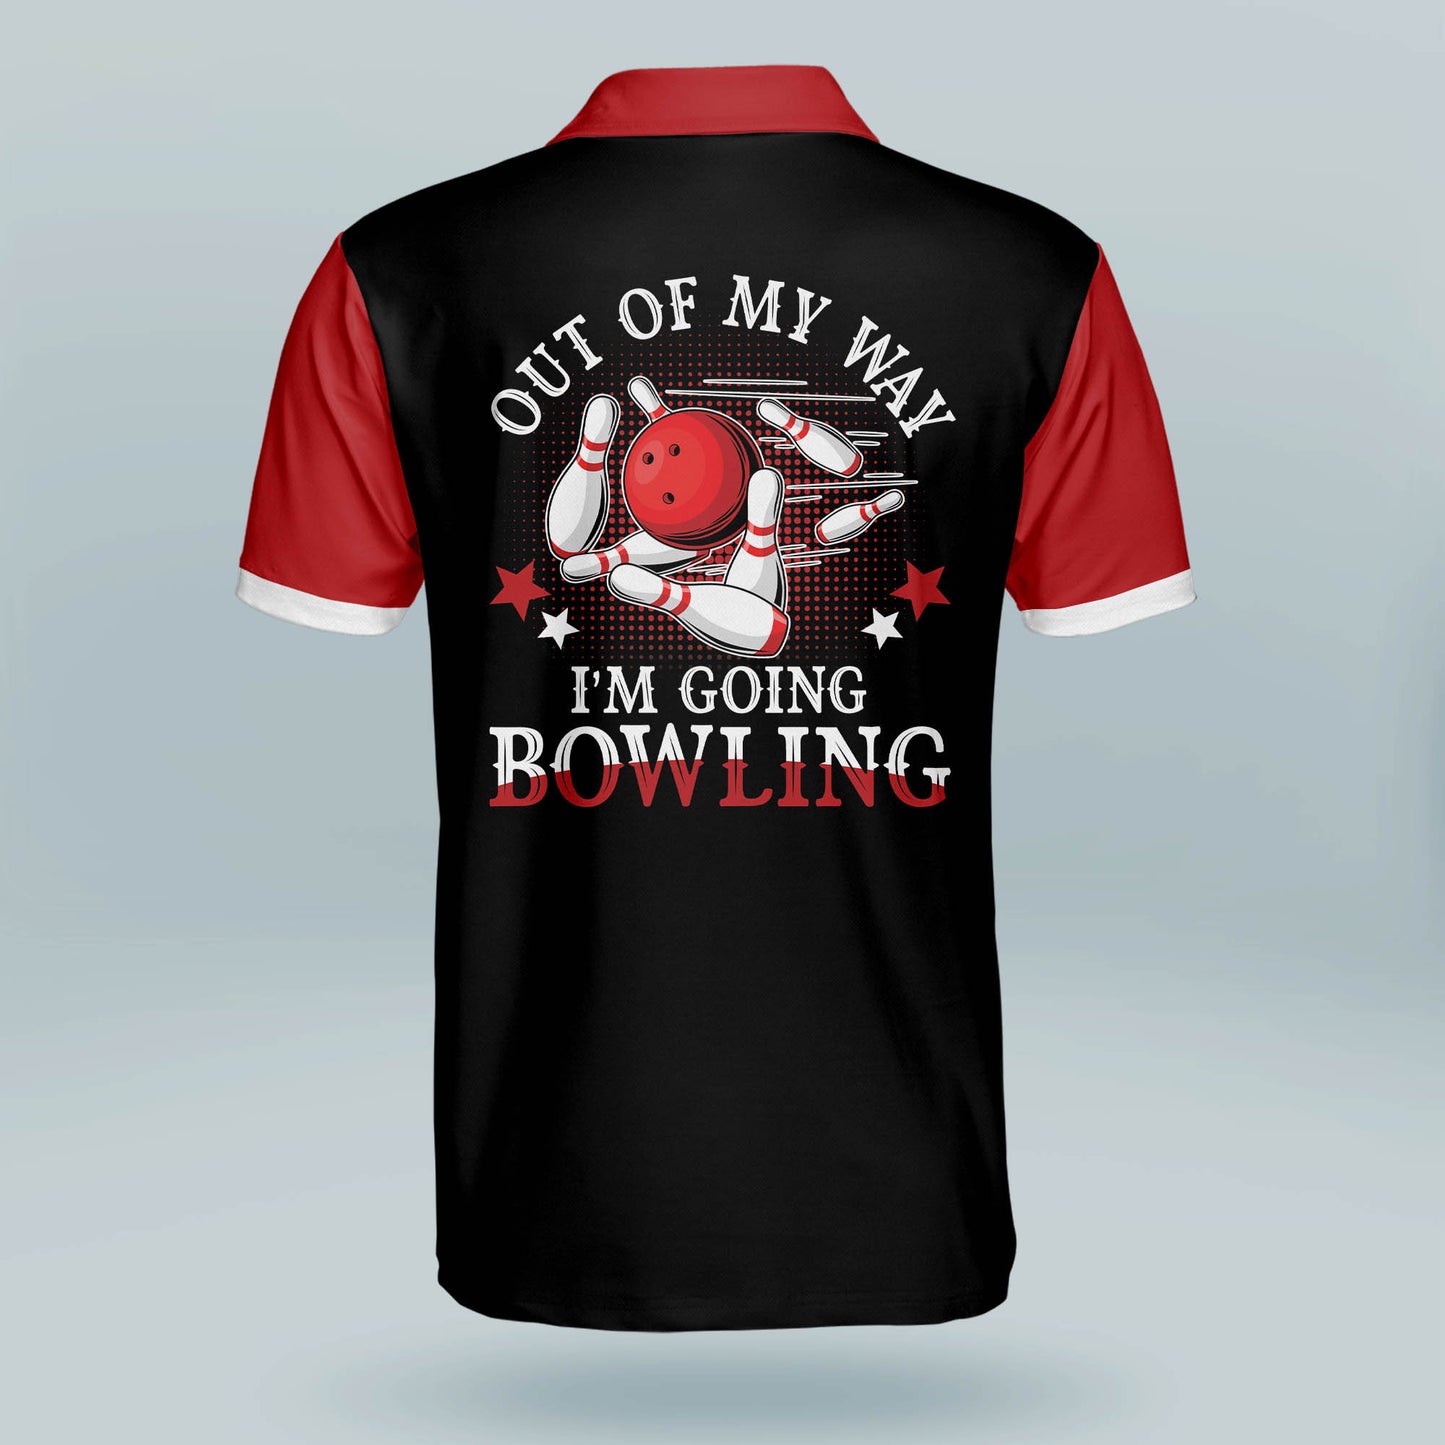 Custom Bowling Shirts For Men - Men's Bowling Shirts Vintage With Name - Funny Bowling Shirts Retro - Black And Red Short Sleeve Bowling Shirt For Men BM0057